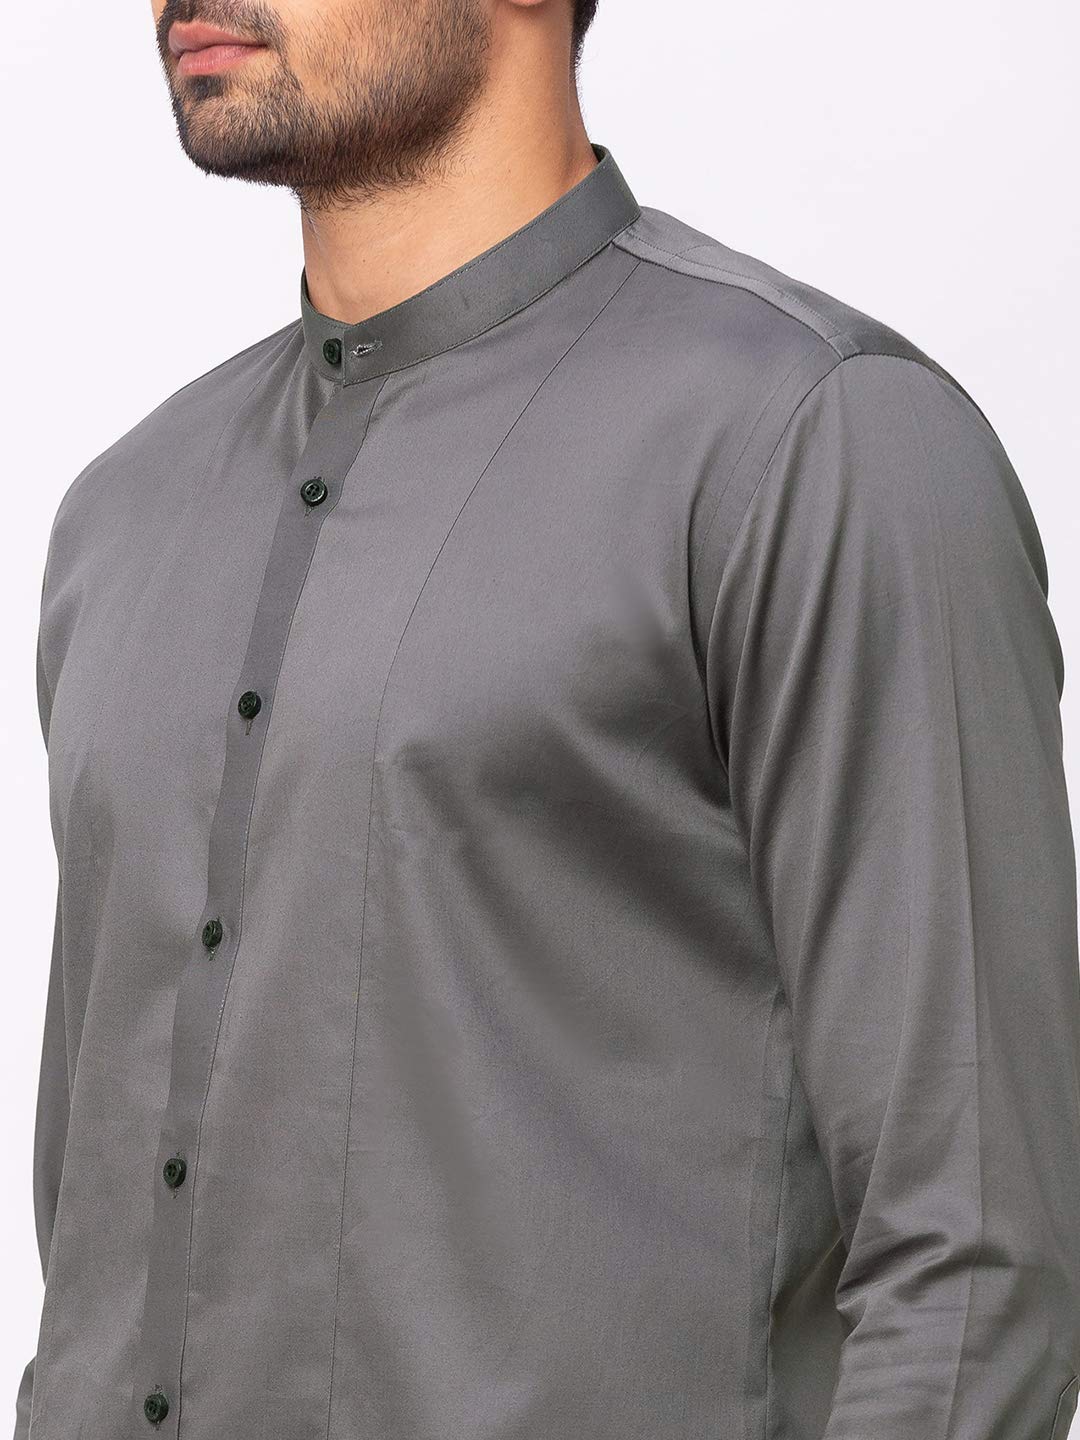 Grey Formal Shirt with Mandarin Collar